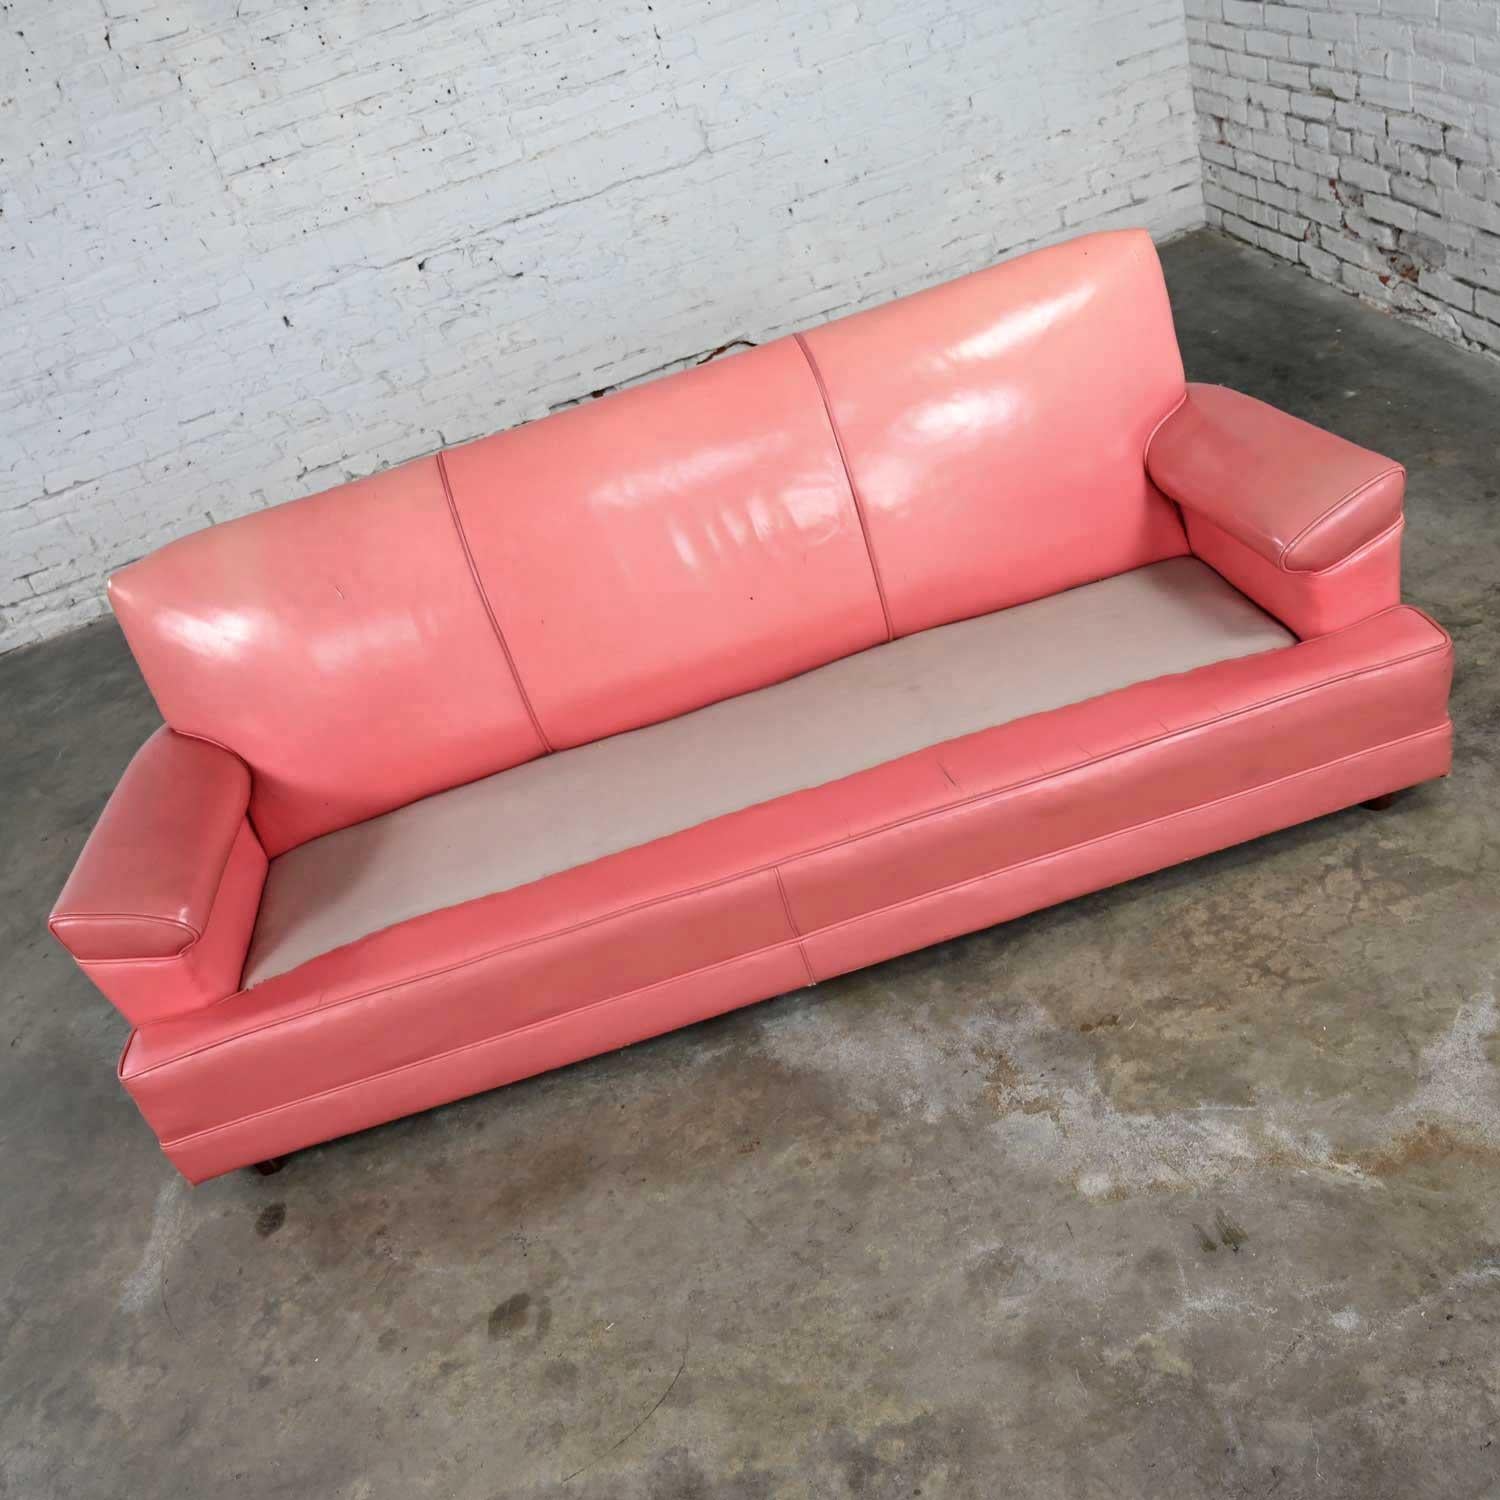 Vintage Hollywood Regency Art Deco Sofa with Original Pink Distressed Leather 7